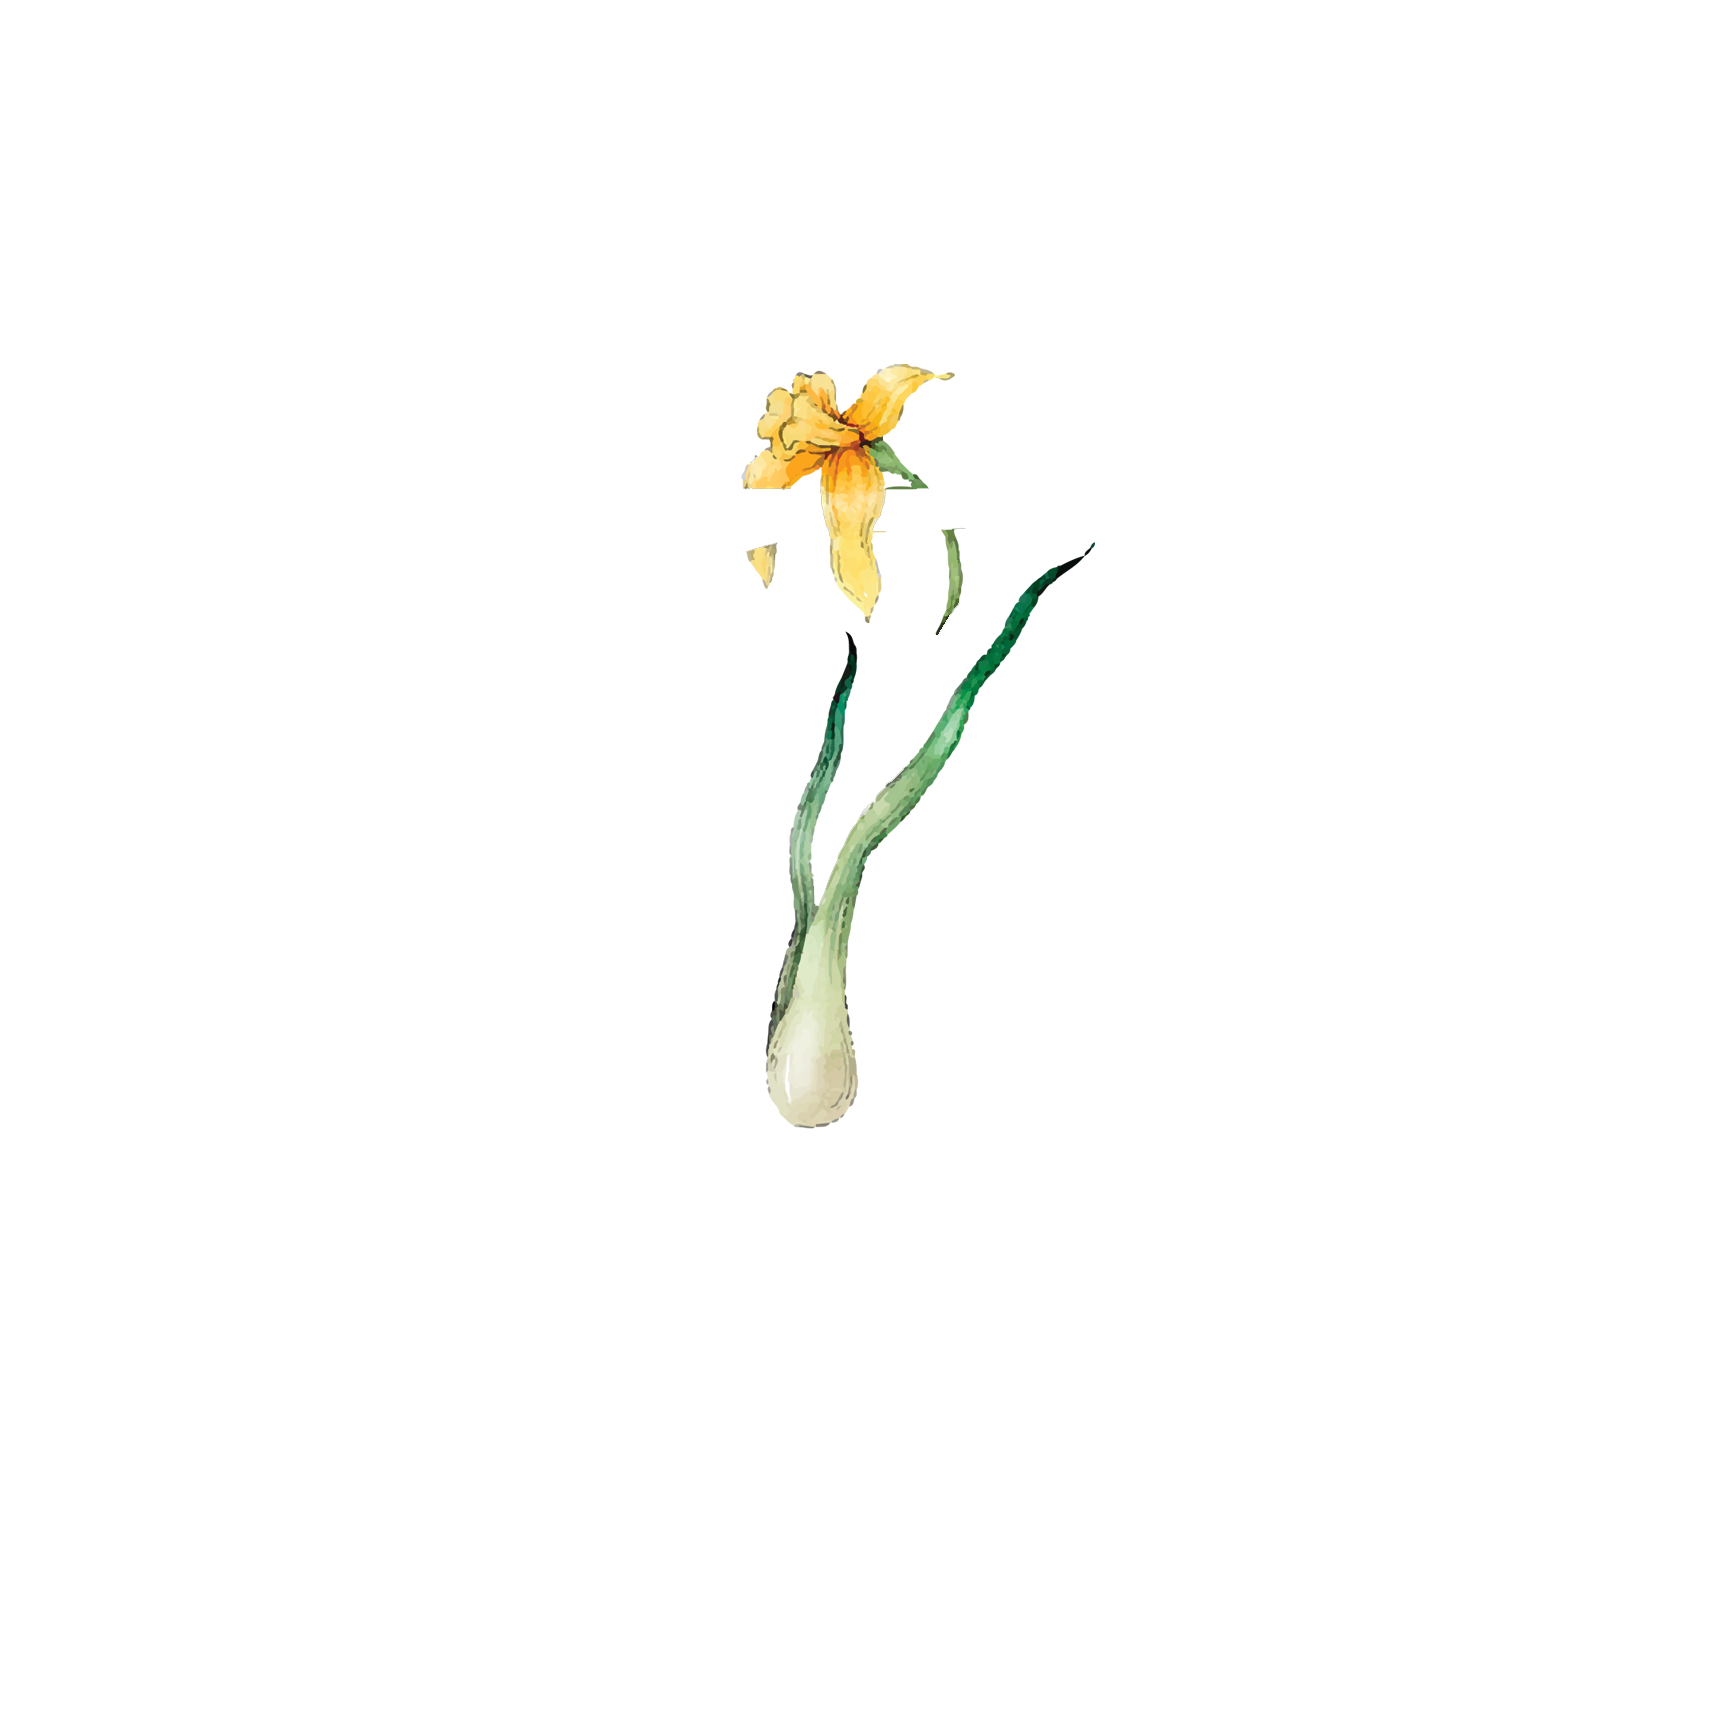 Click to read Day 7 - Self-Compassion